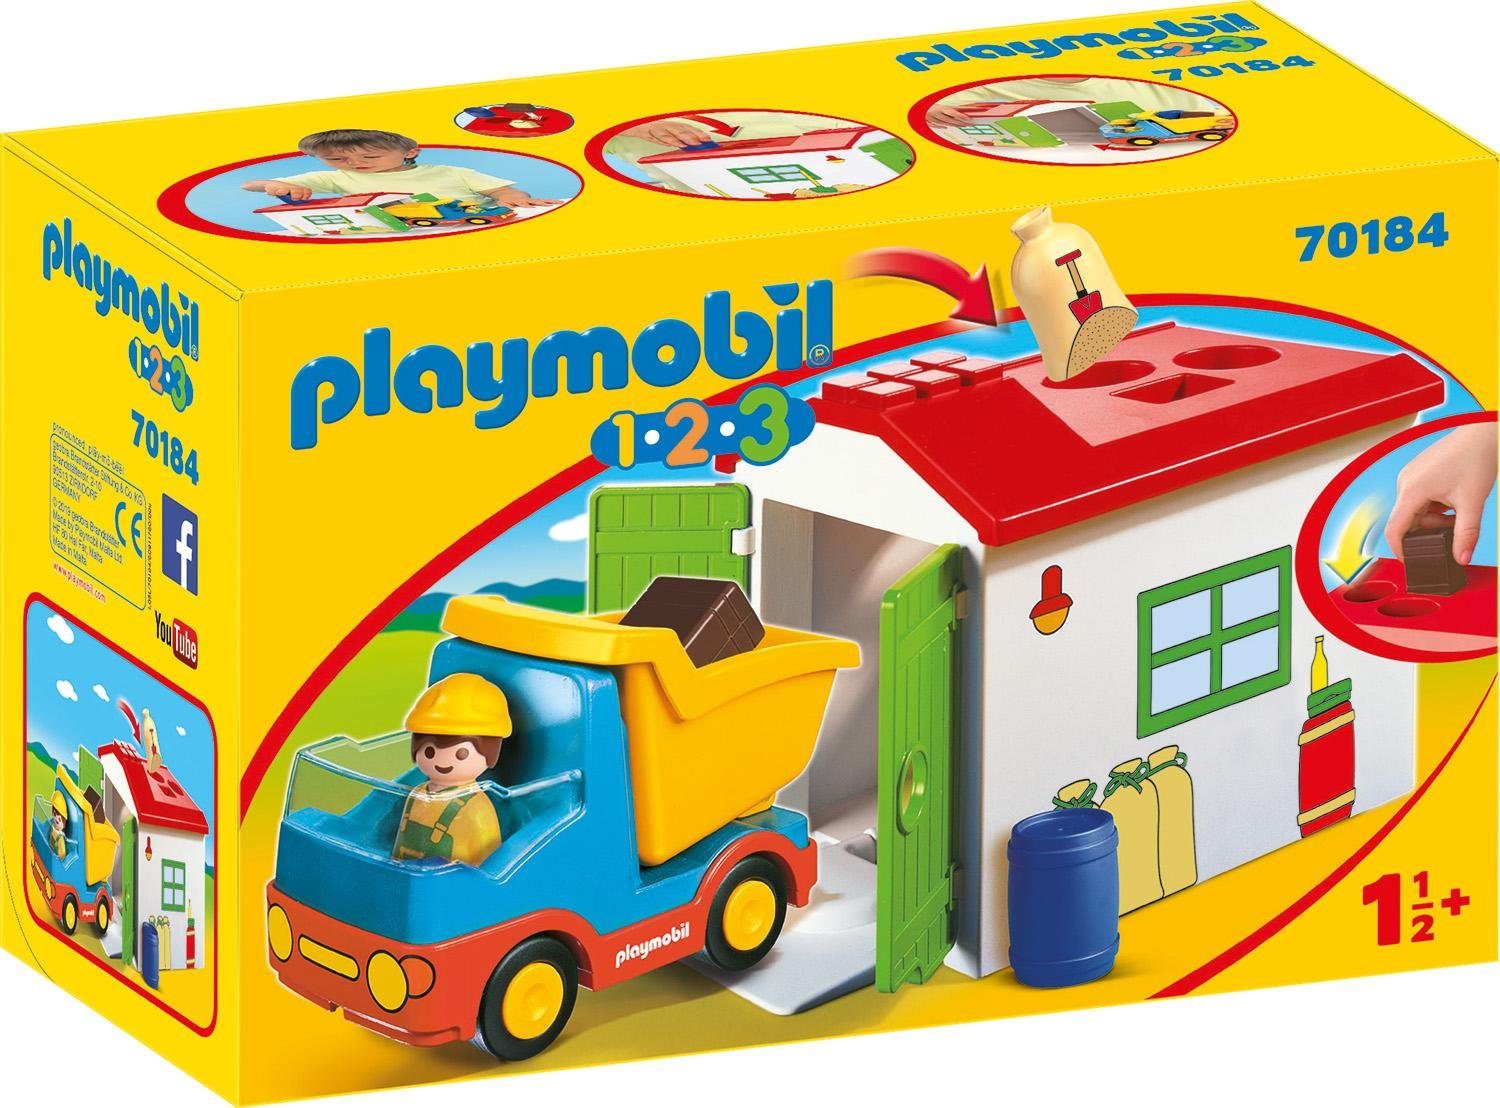 Europe LKW Playmobil in Playmobil® 1-2-3, (70184), Sortiergarage mit Konstruktions-Spielset Made